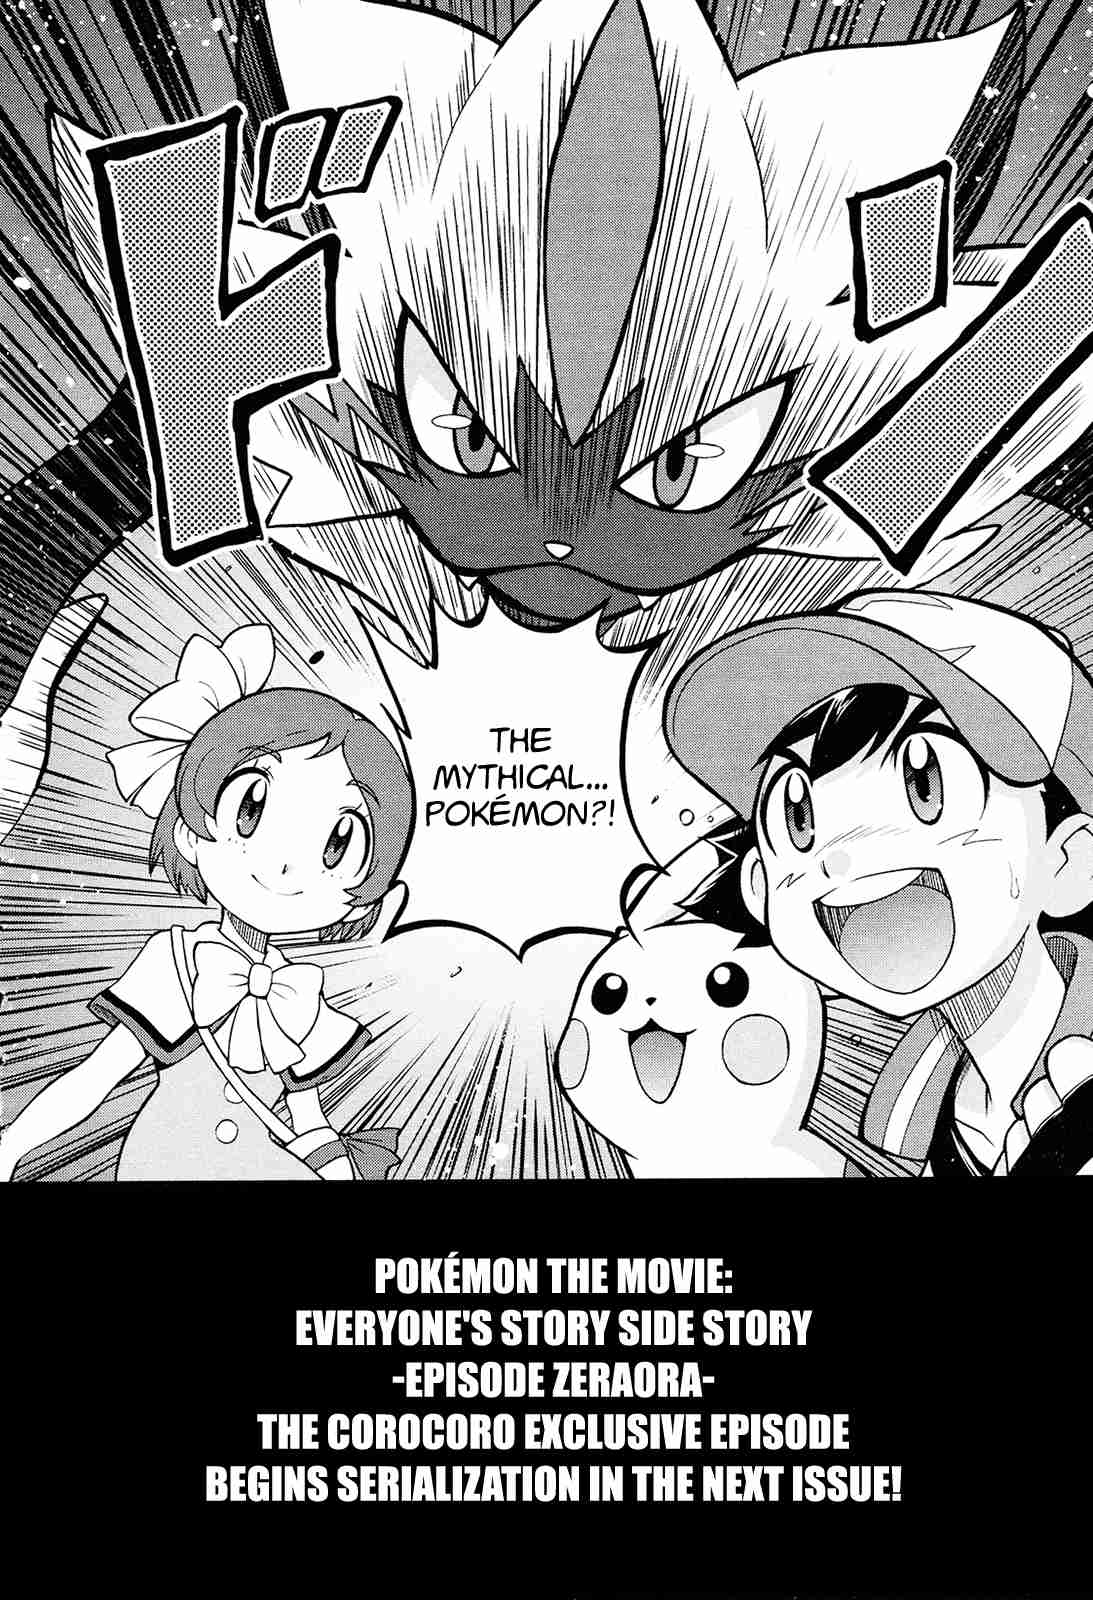 Pokémon the Movie: Everyone's Story Episode Zeraora Ch. 0 Prologue